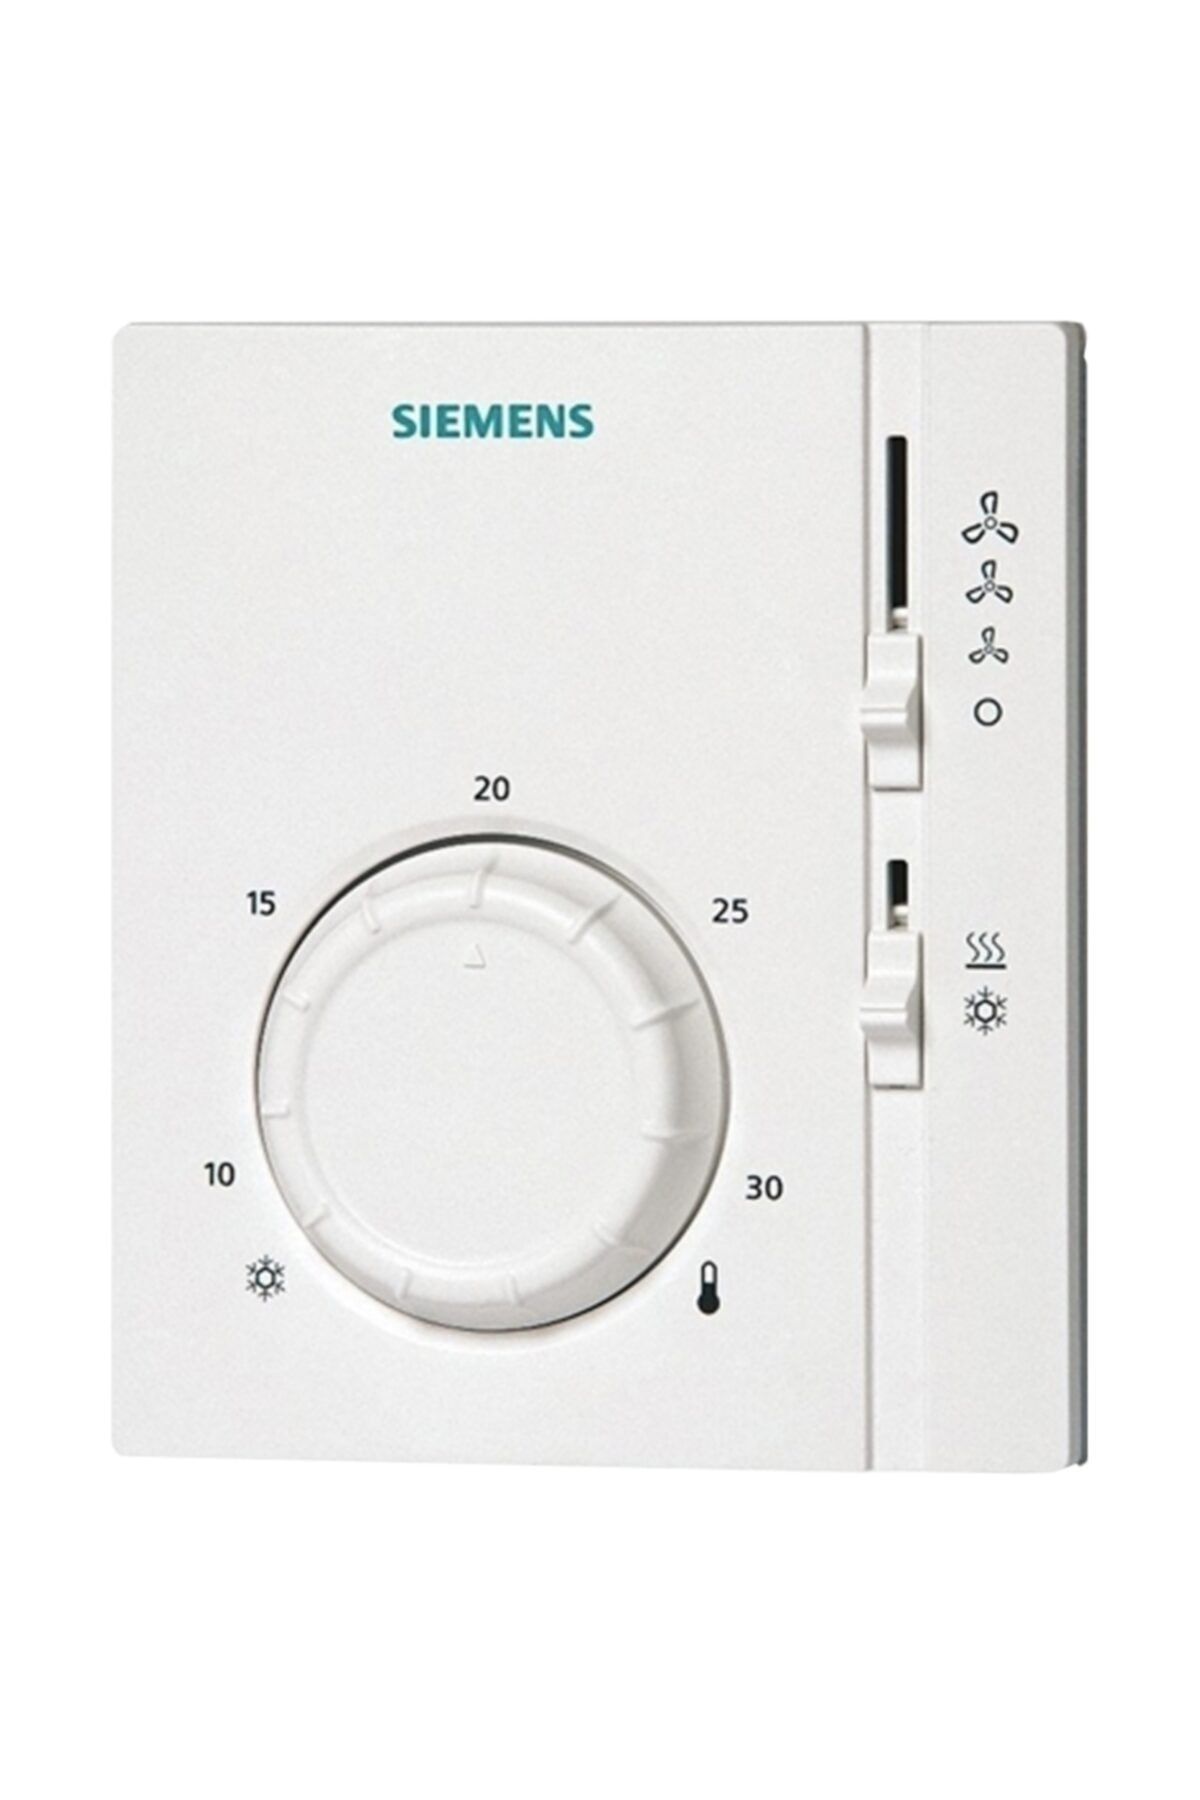 Siemens Sıemens - Rab31 Fan Coil Sistemleri Oda Termostatı